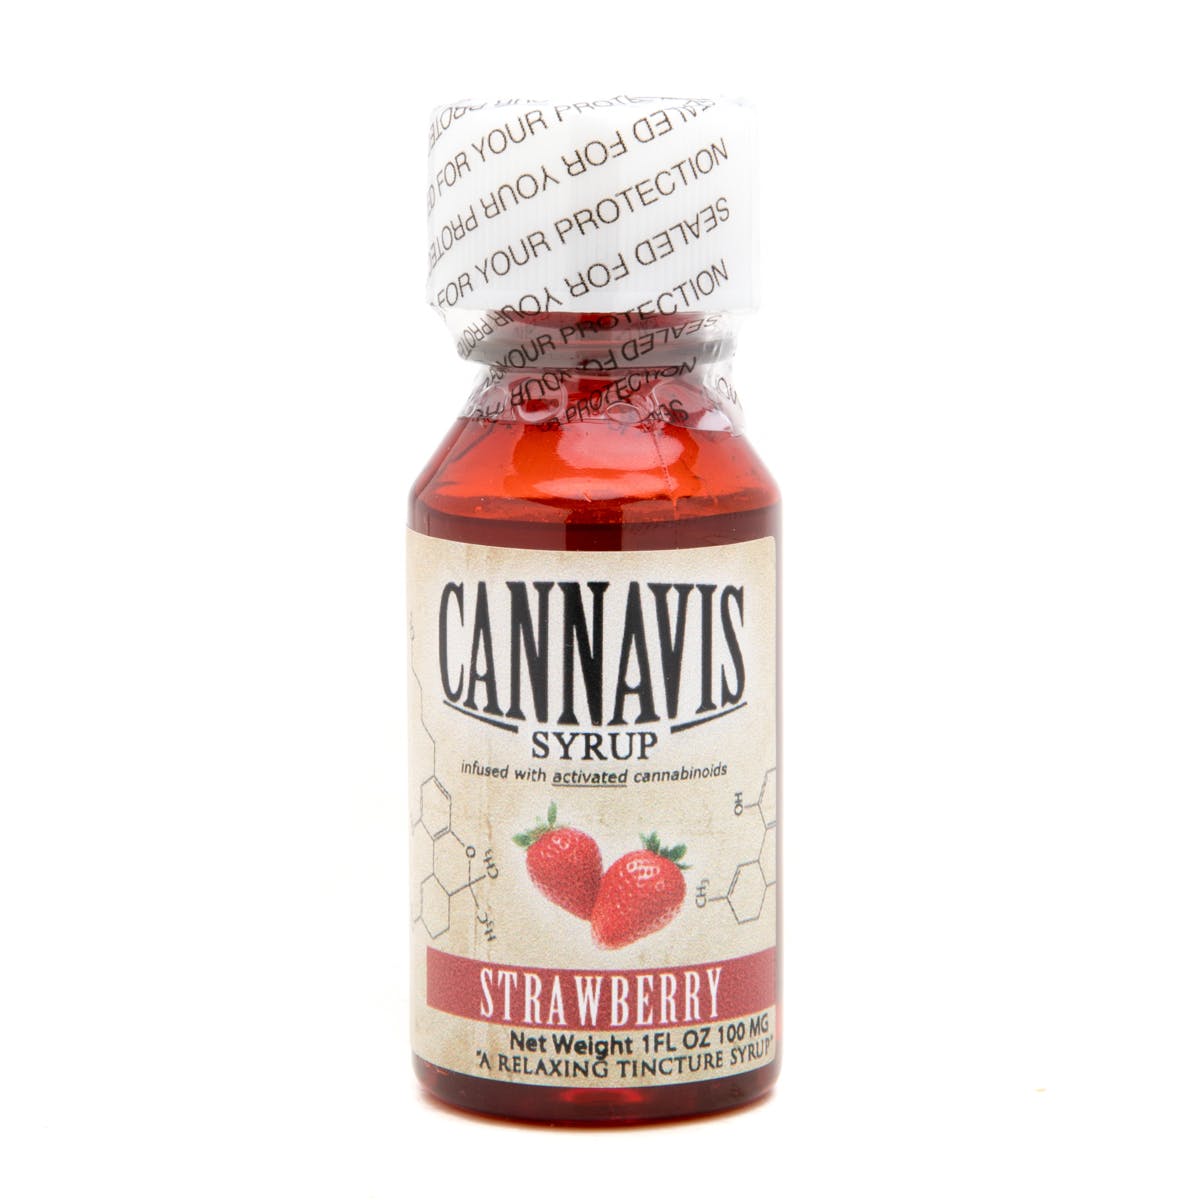 marijuana-dispensaries-hot-box-20-cap-collective-in-los-angeles-cannavis-syrup-2c-strawberry-100mg